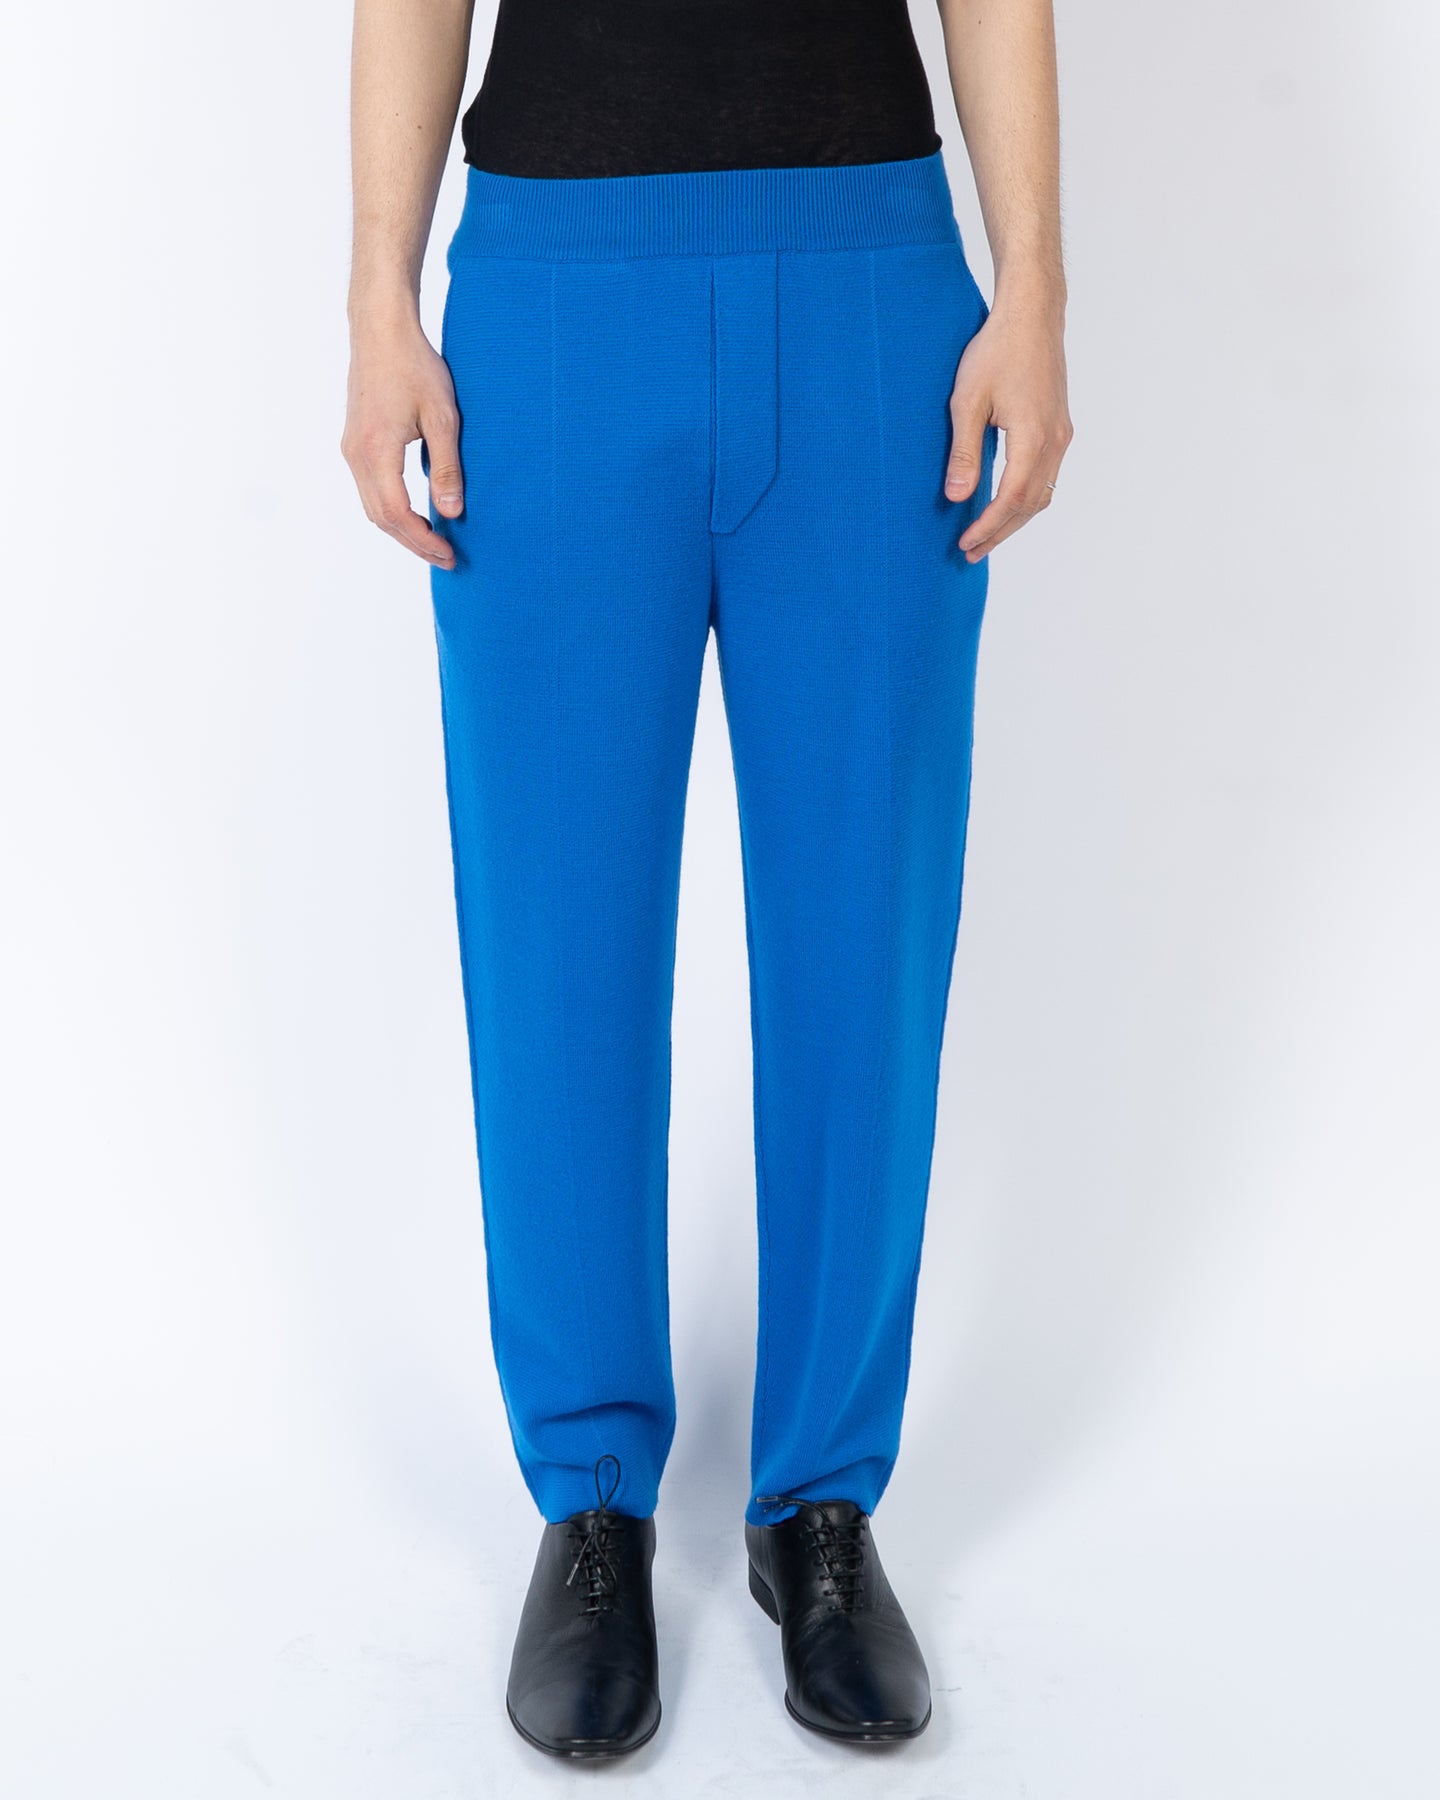 FW19 Royal Blue Cashmere Lounge Pants